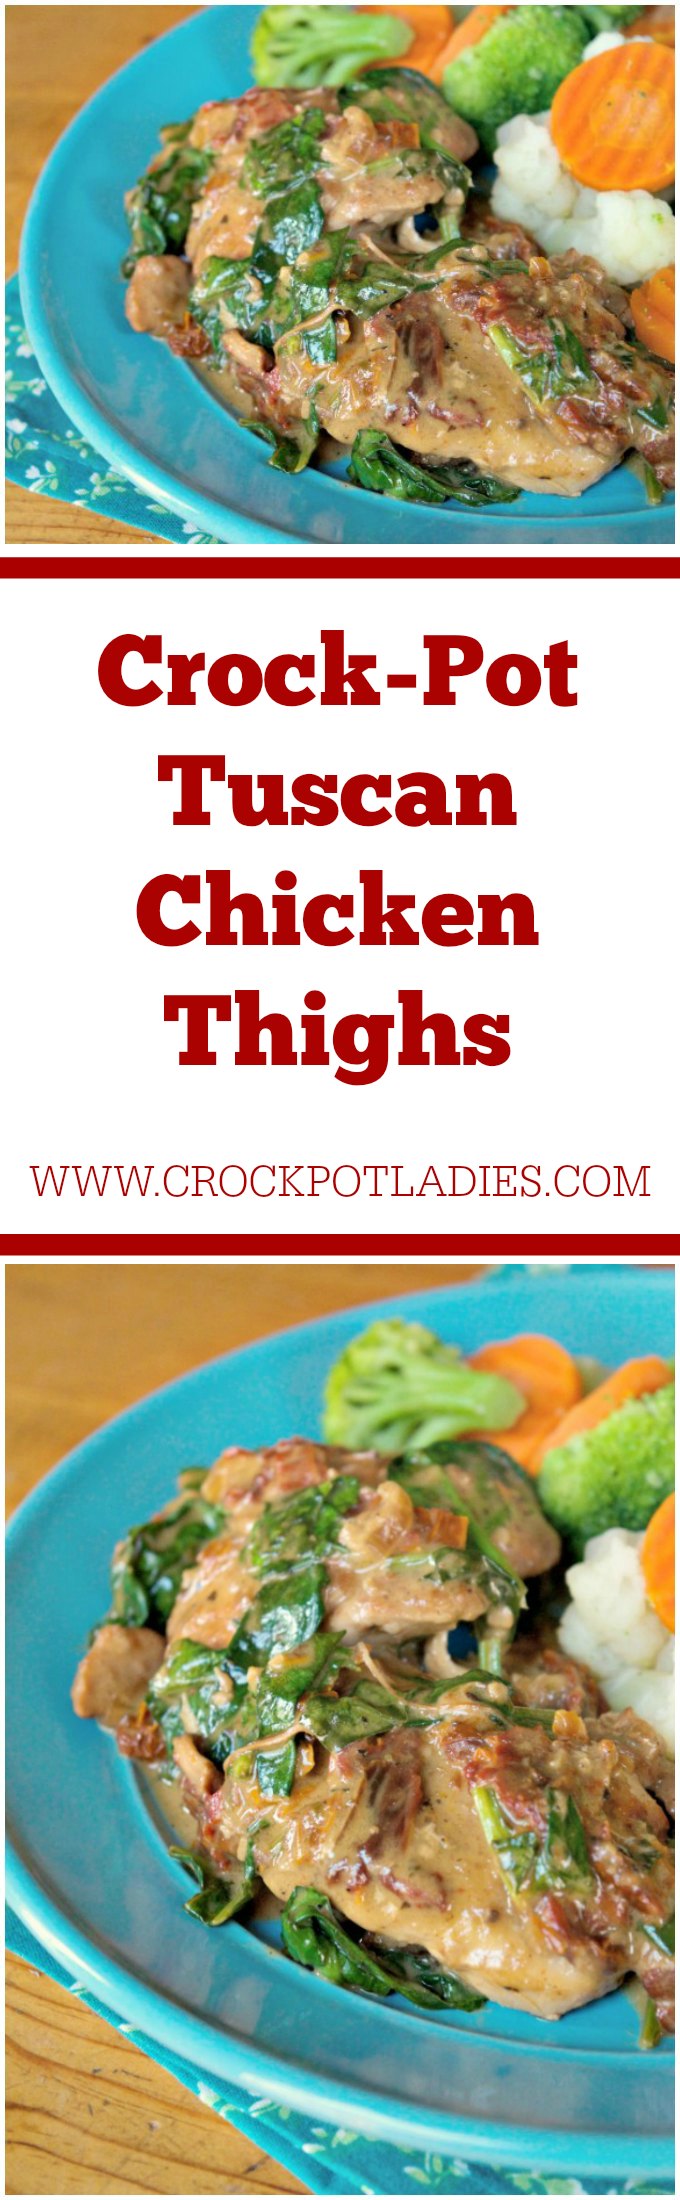 Crock-Pot Tuscan Chicken Thighs